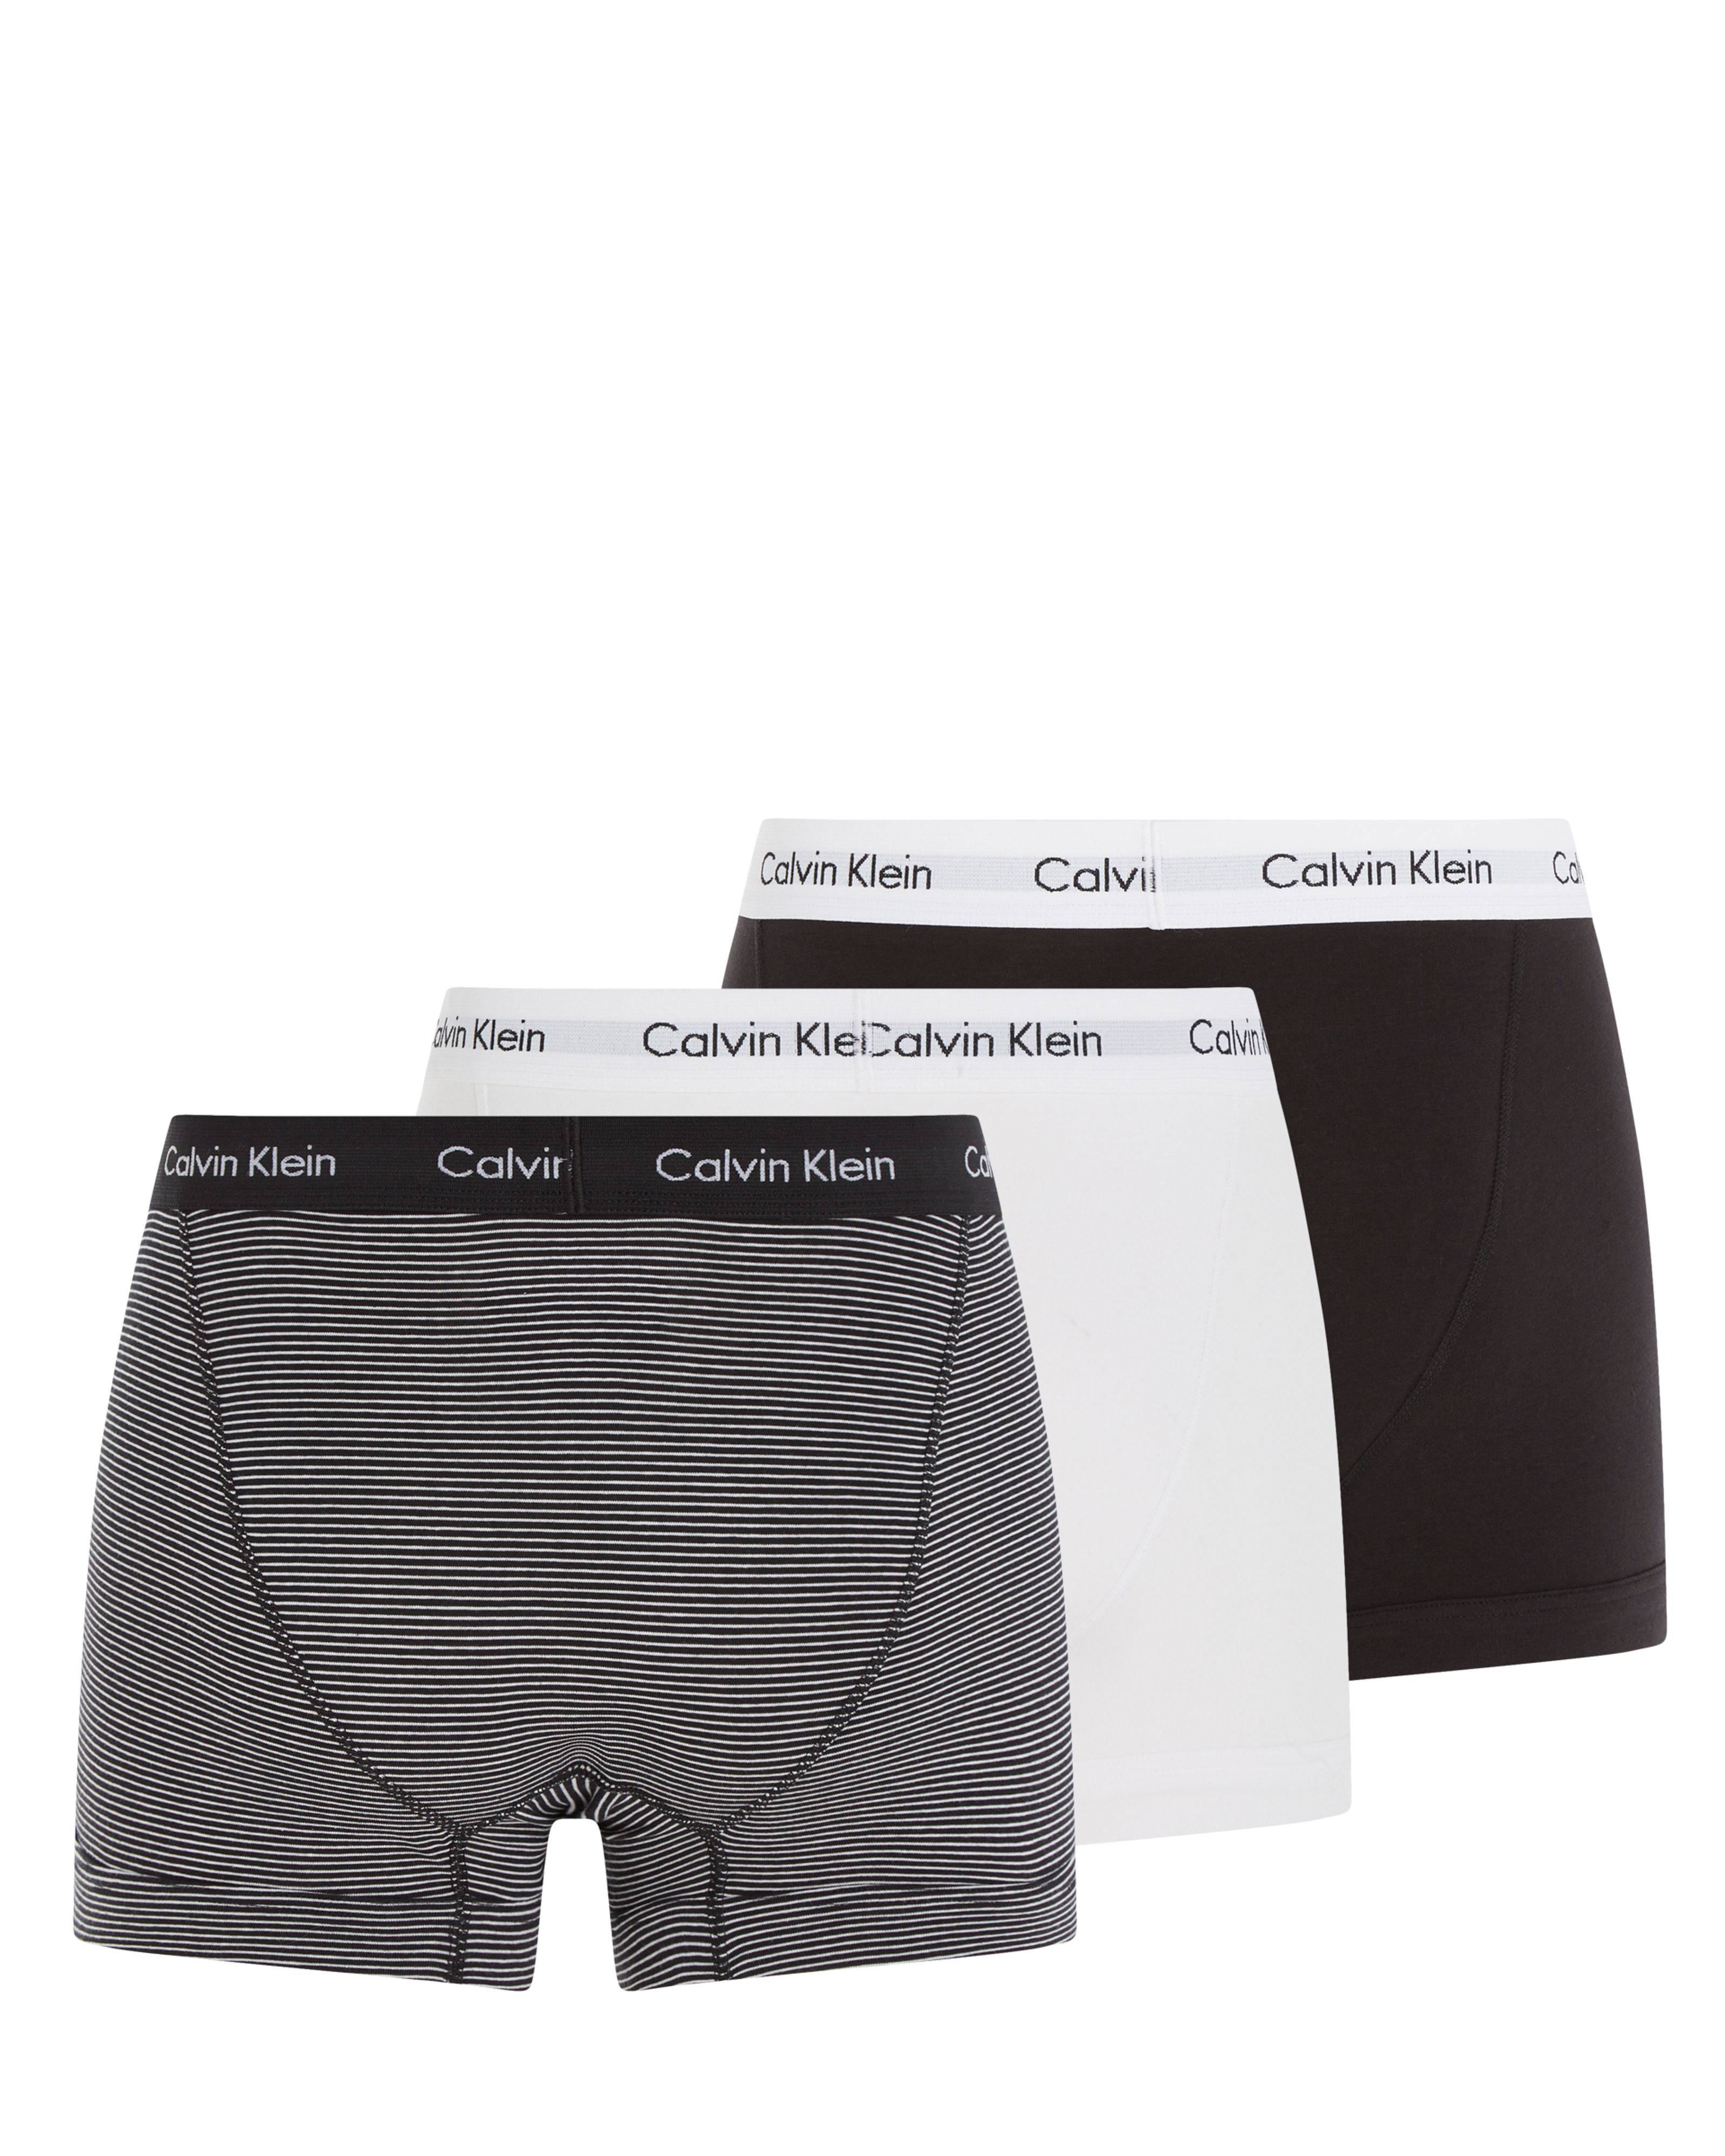 Calvin Klein Menswear Boxershort 3-pack Multicolor 092208-001-L